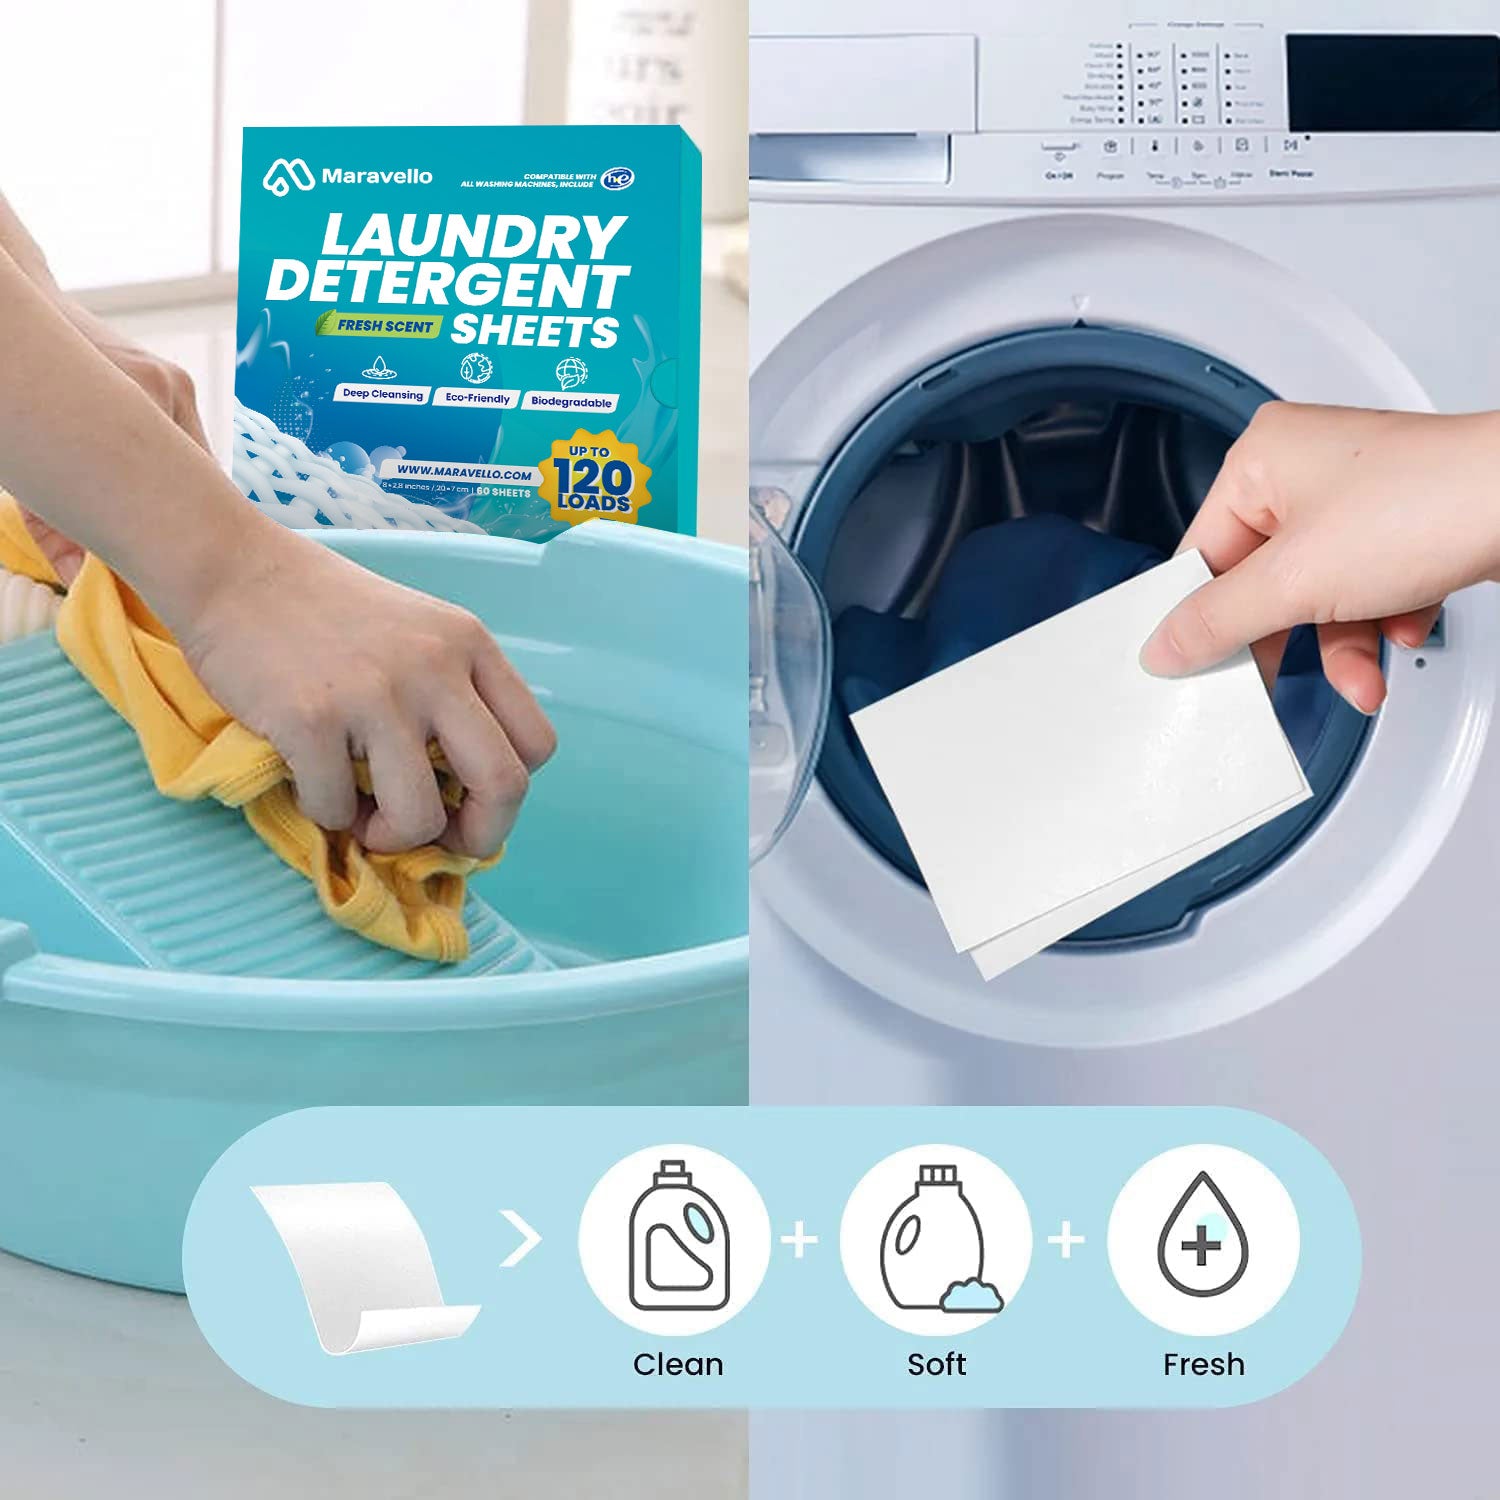 Laundry Detergent Sheets 160 Loads, Fresh Linen